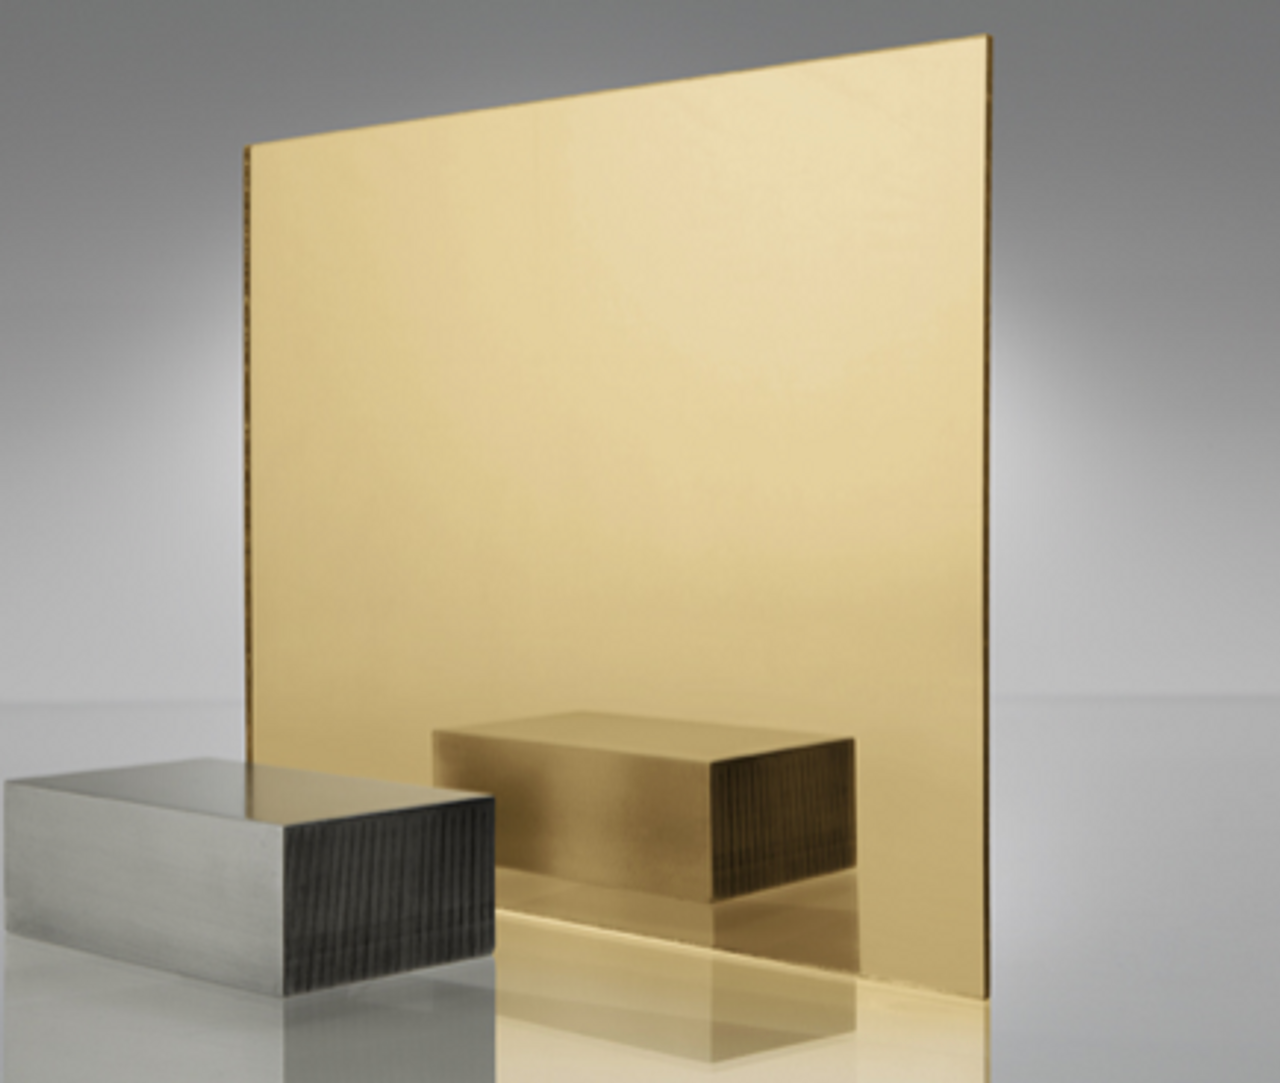 4x8' Mirrored Acrylic GOLD